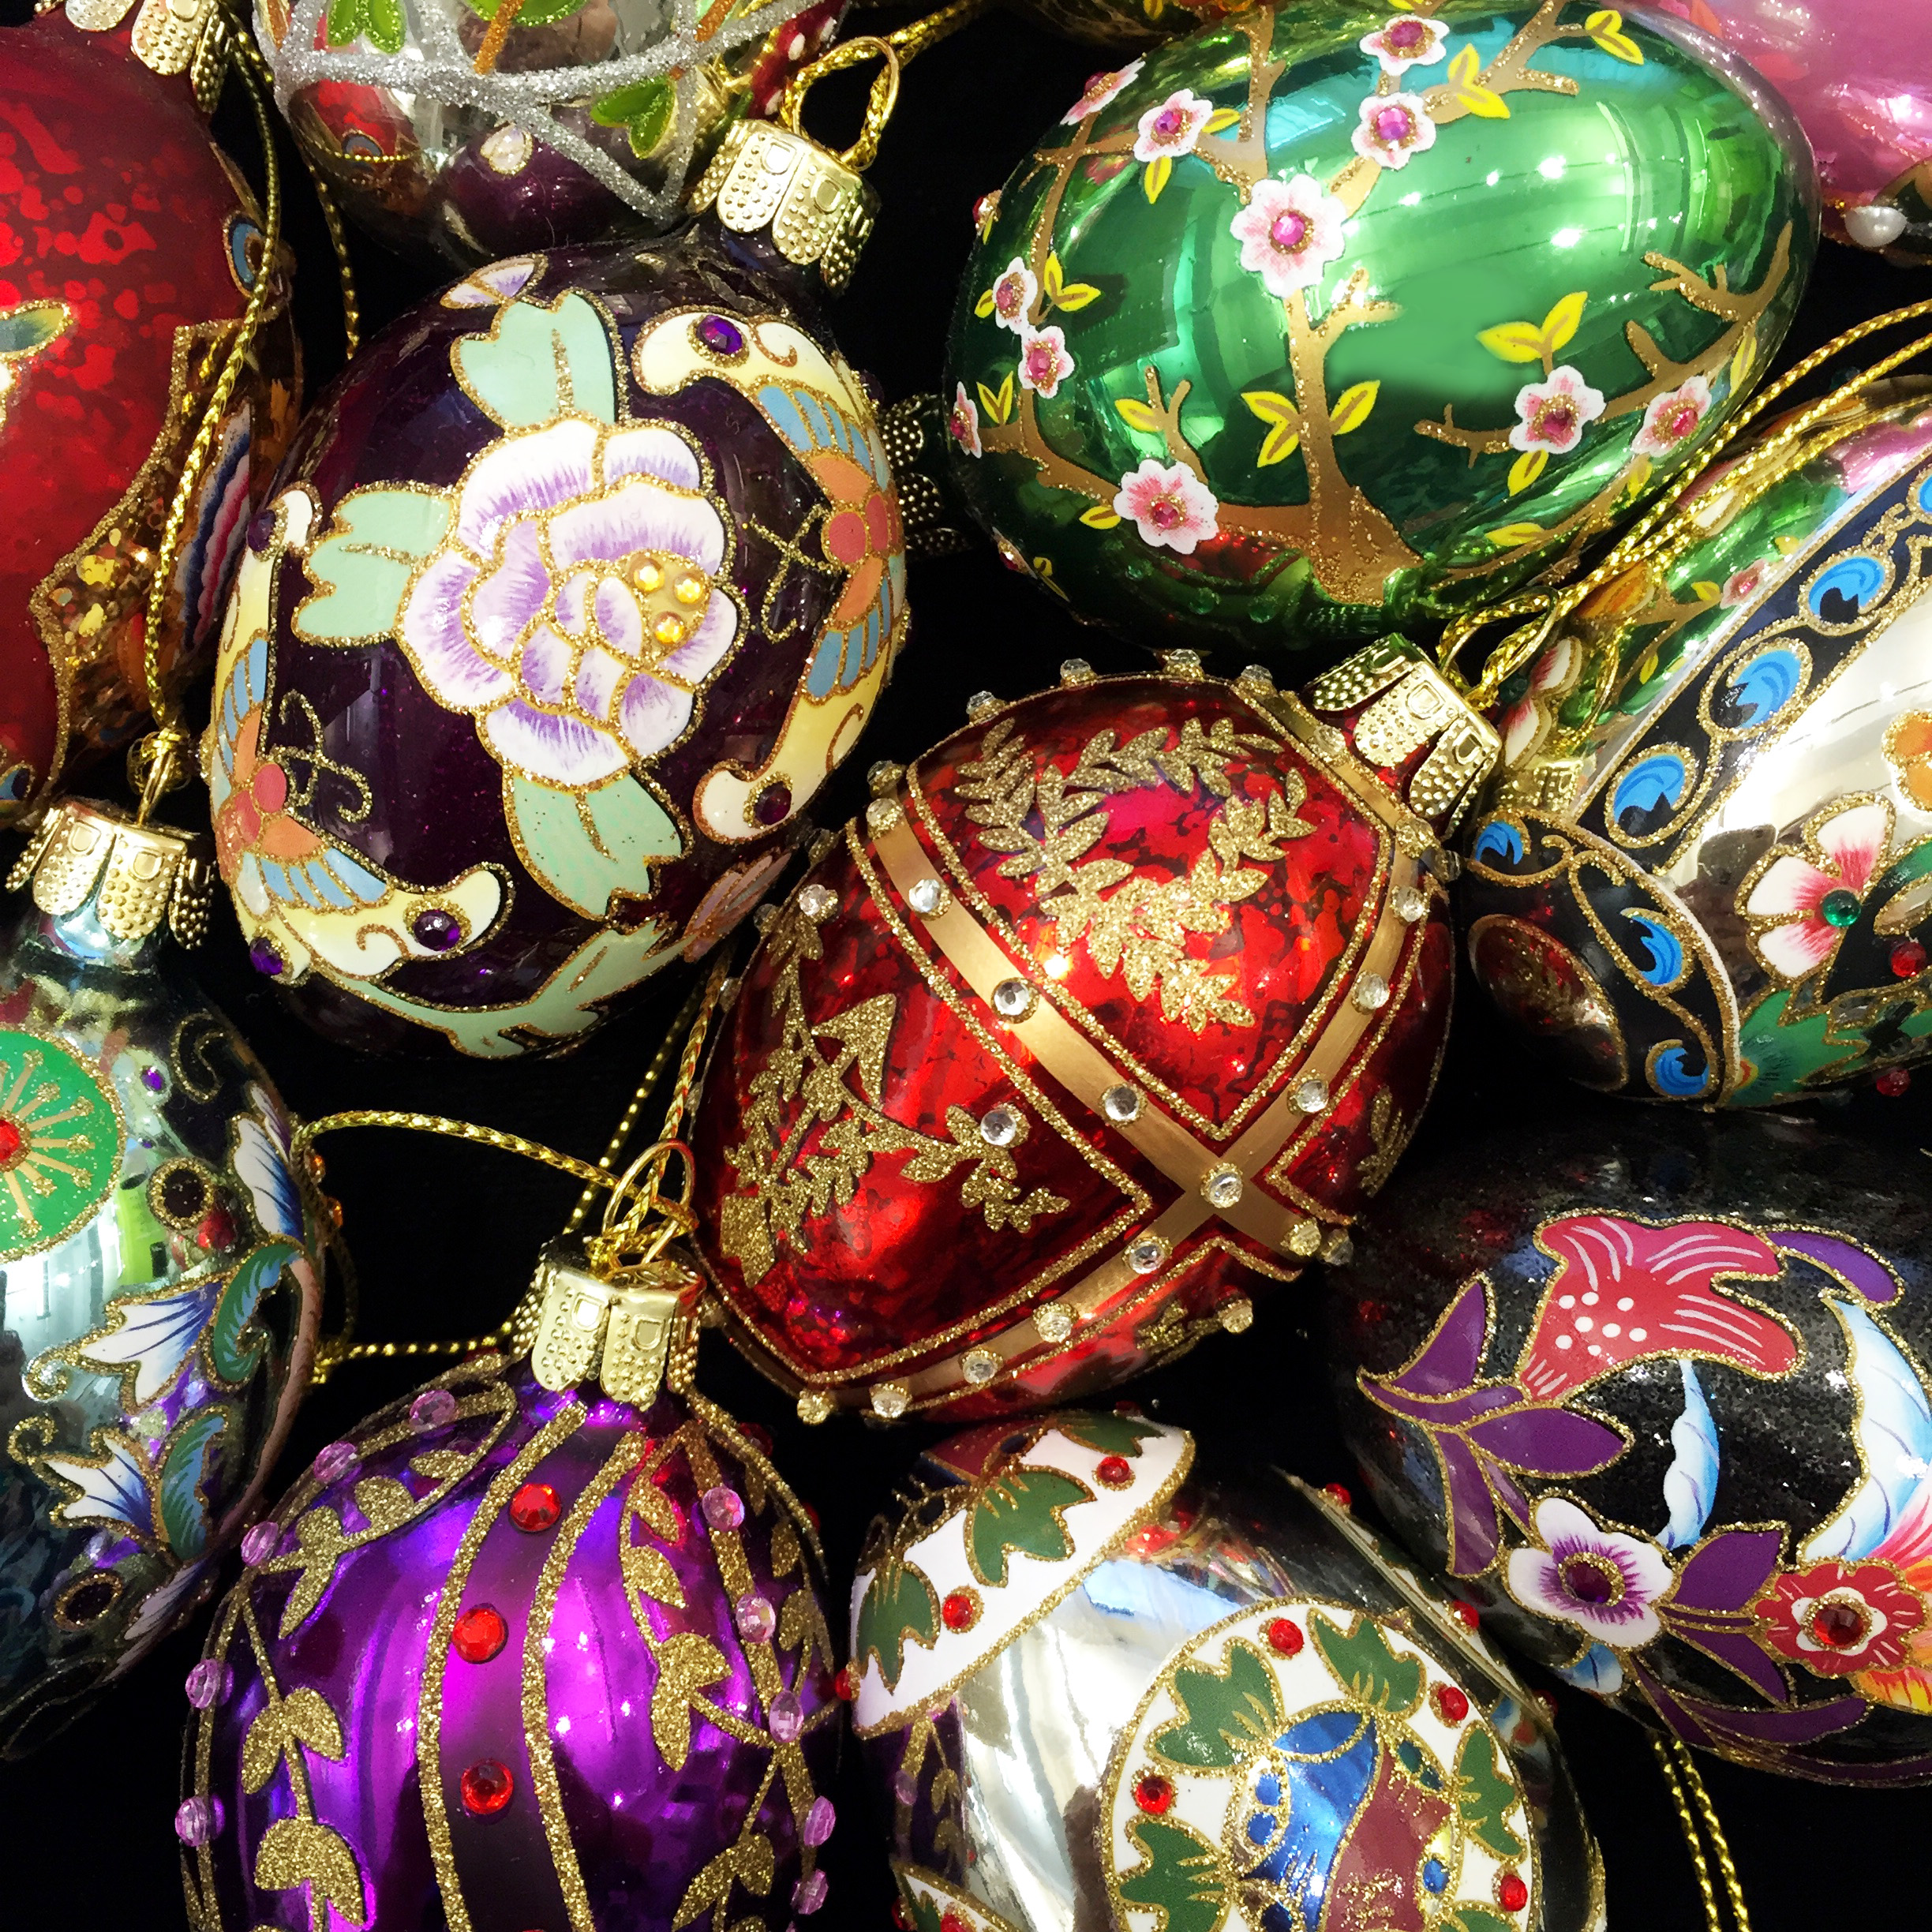 2016 Set of 12 Russian Inspired Mini Egg Ornaments - close up.jpg